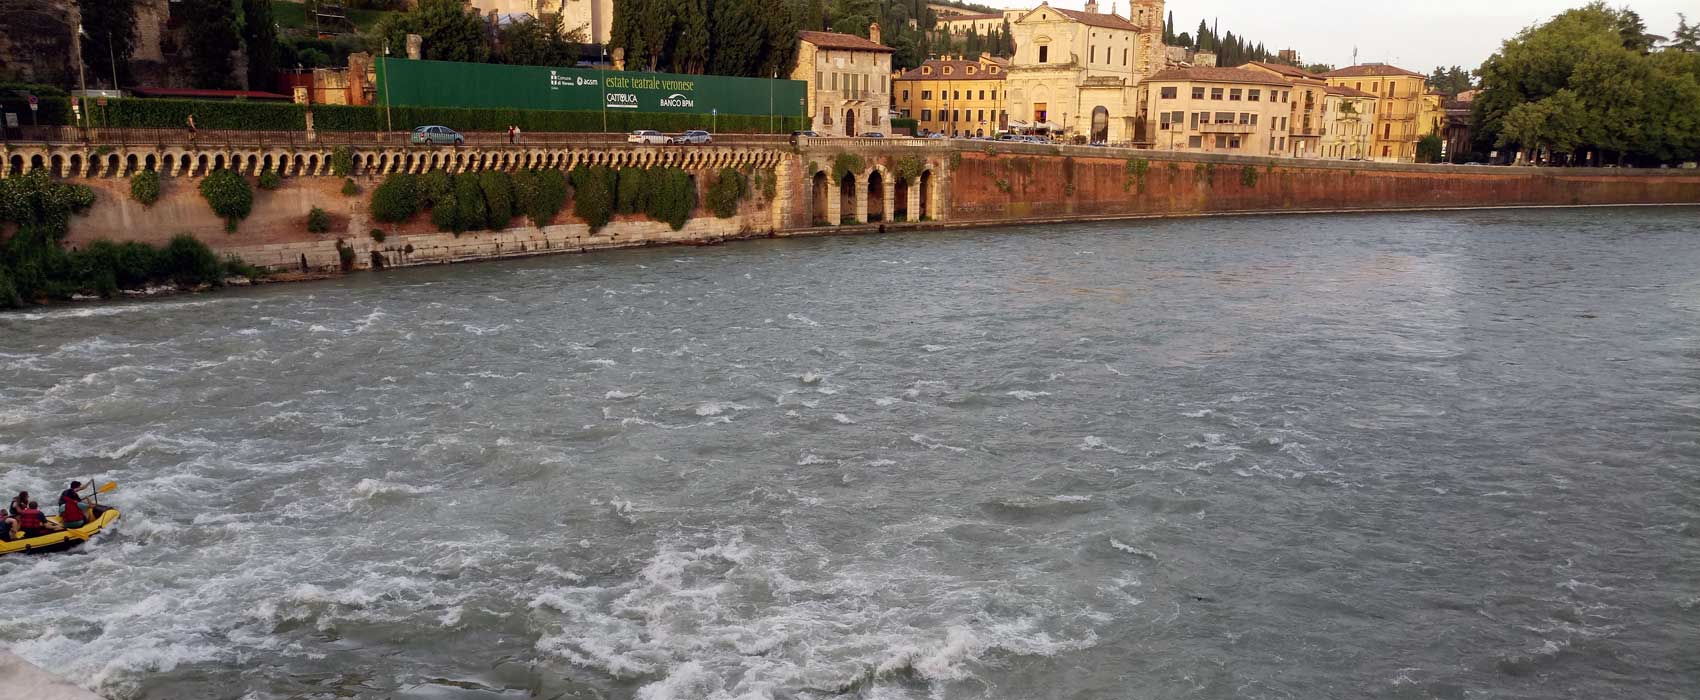 Der Fluss Etsch in Verona